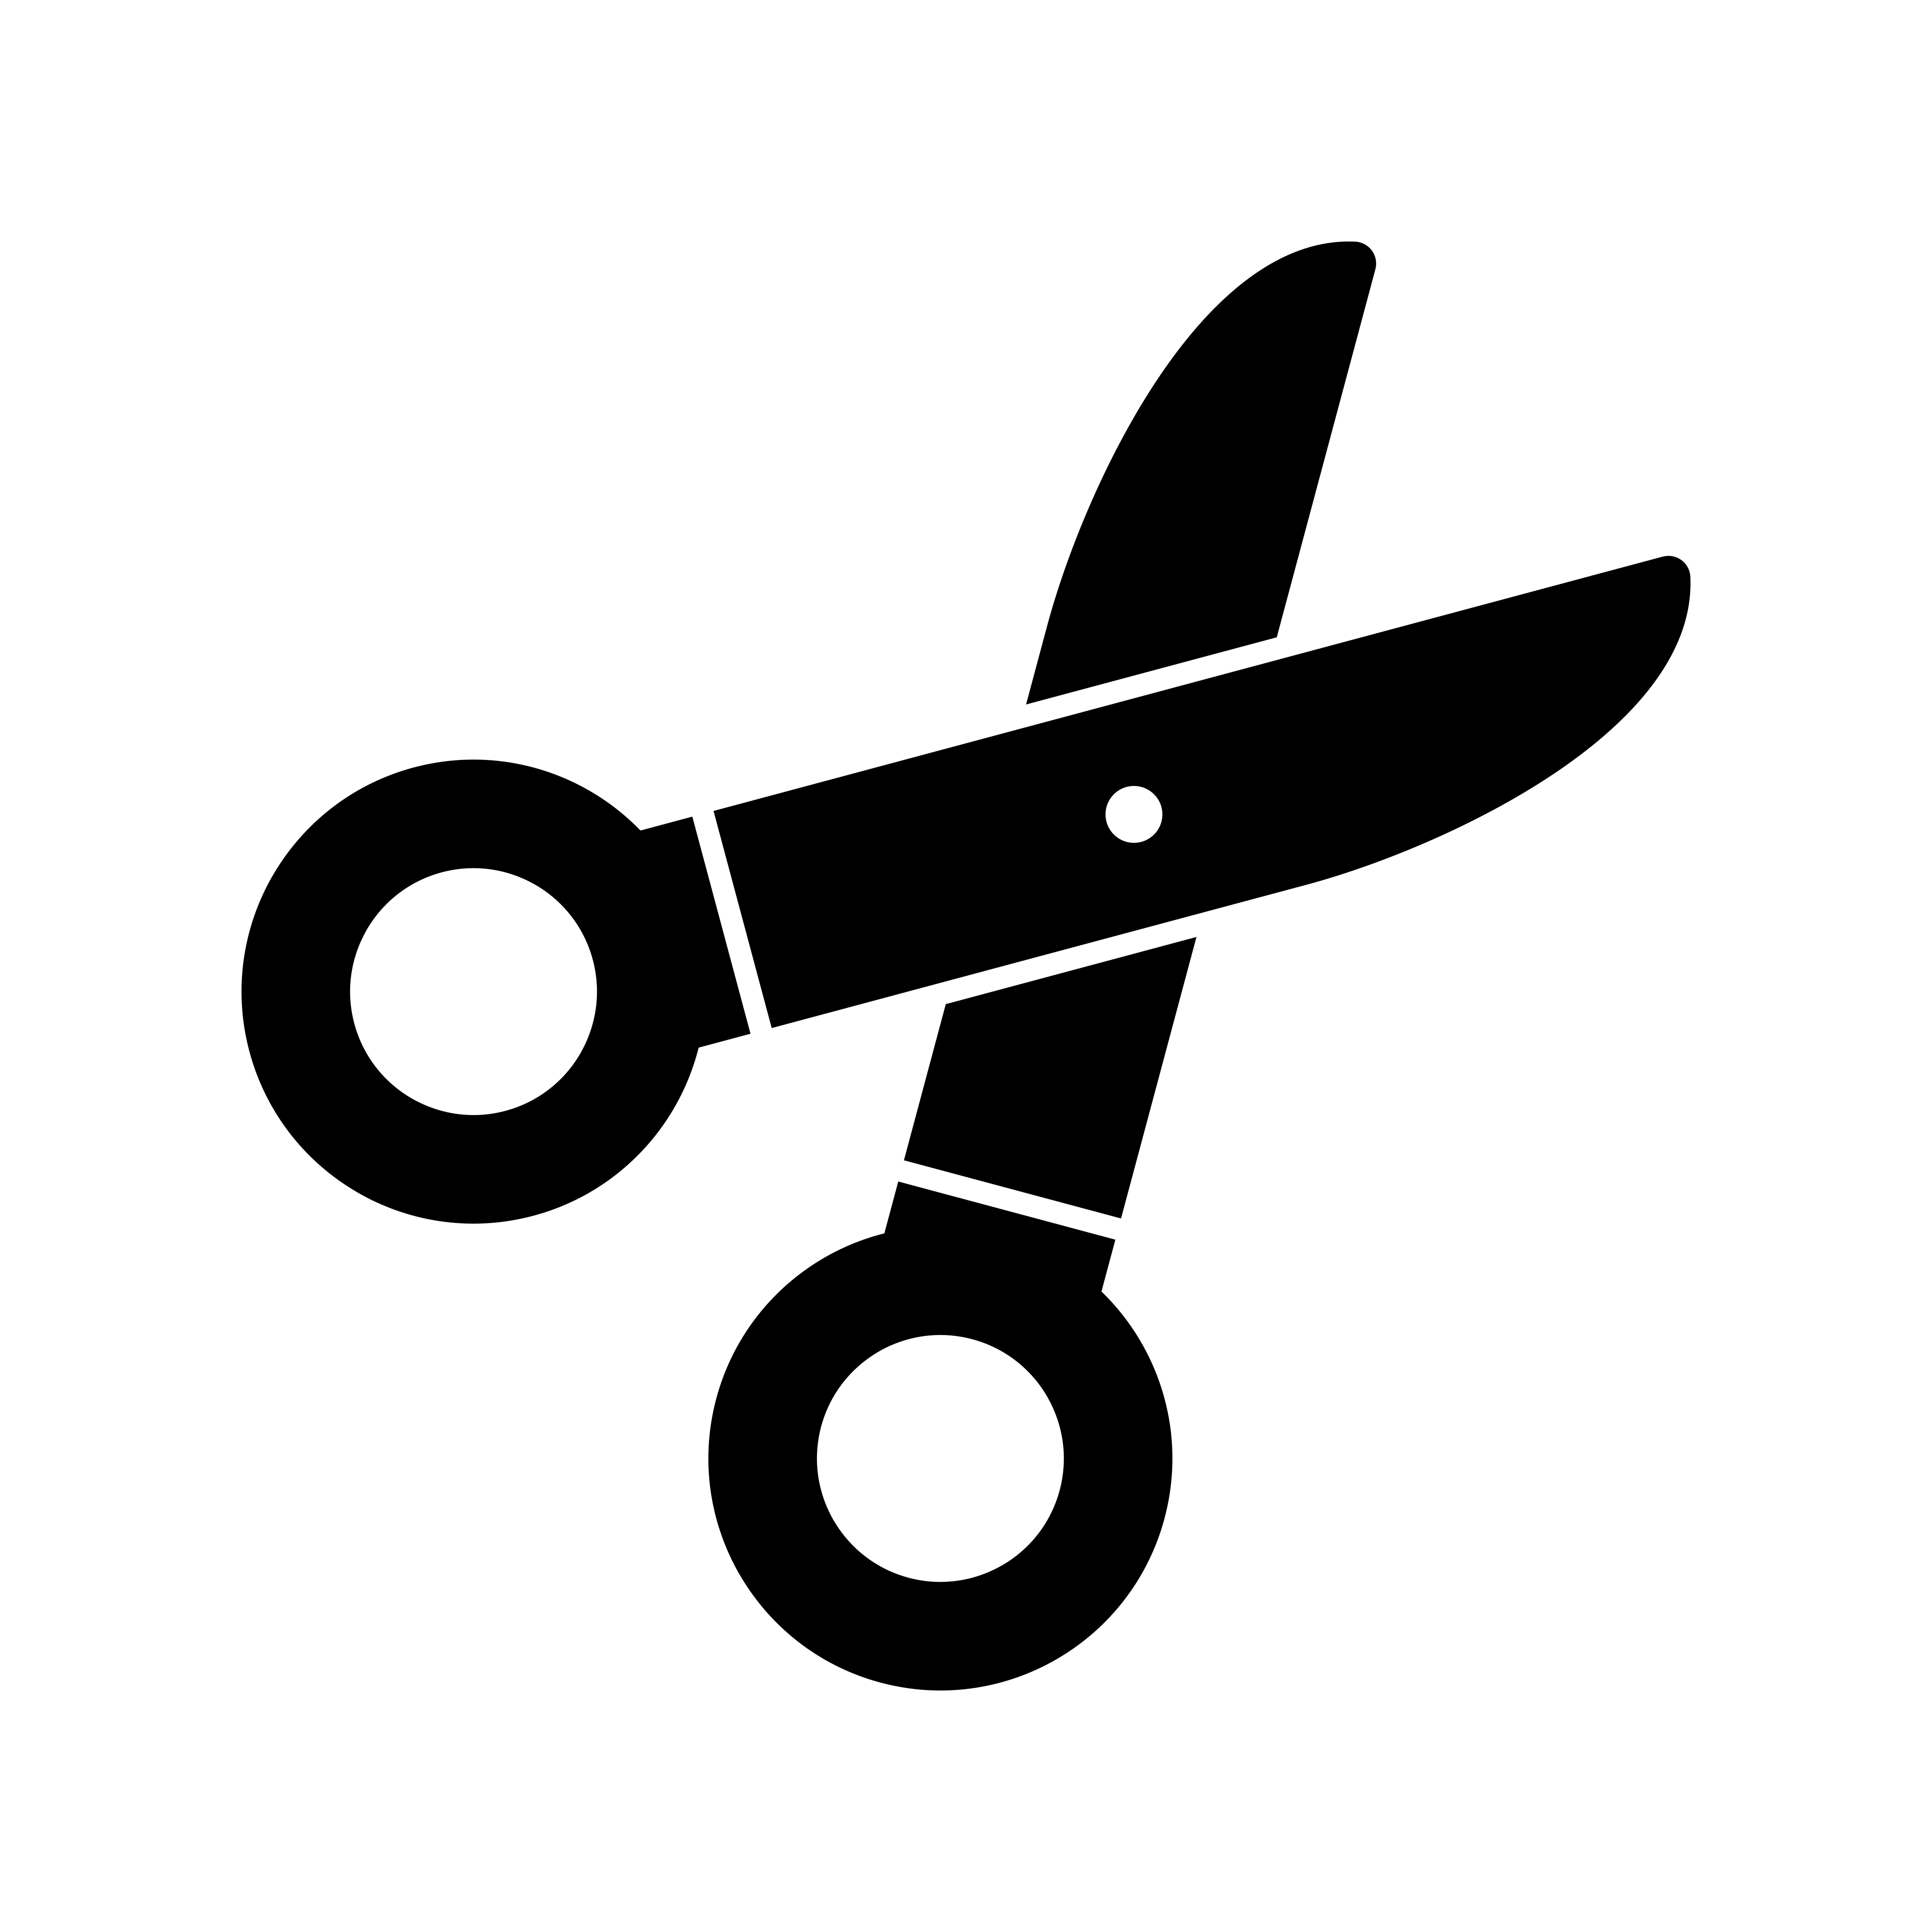 Download Scissors Vector Icon - Download Free Vectors, Clipart Graphics & Vector Art